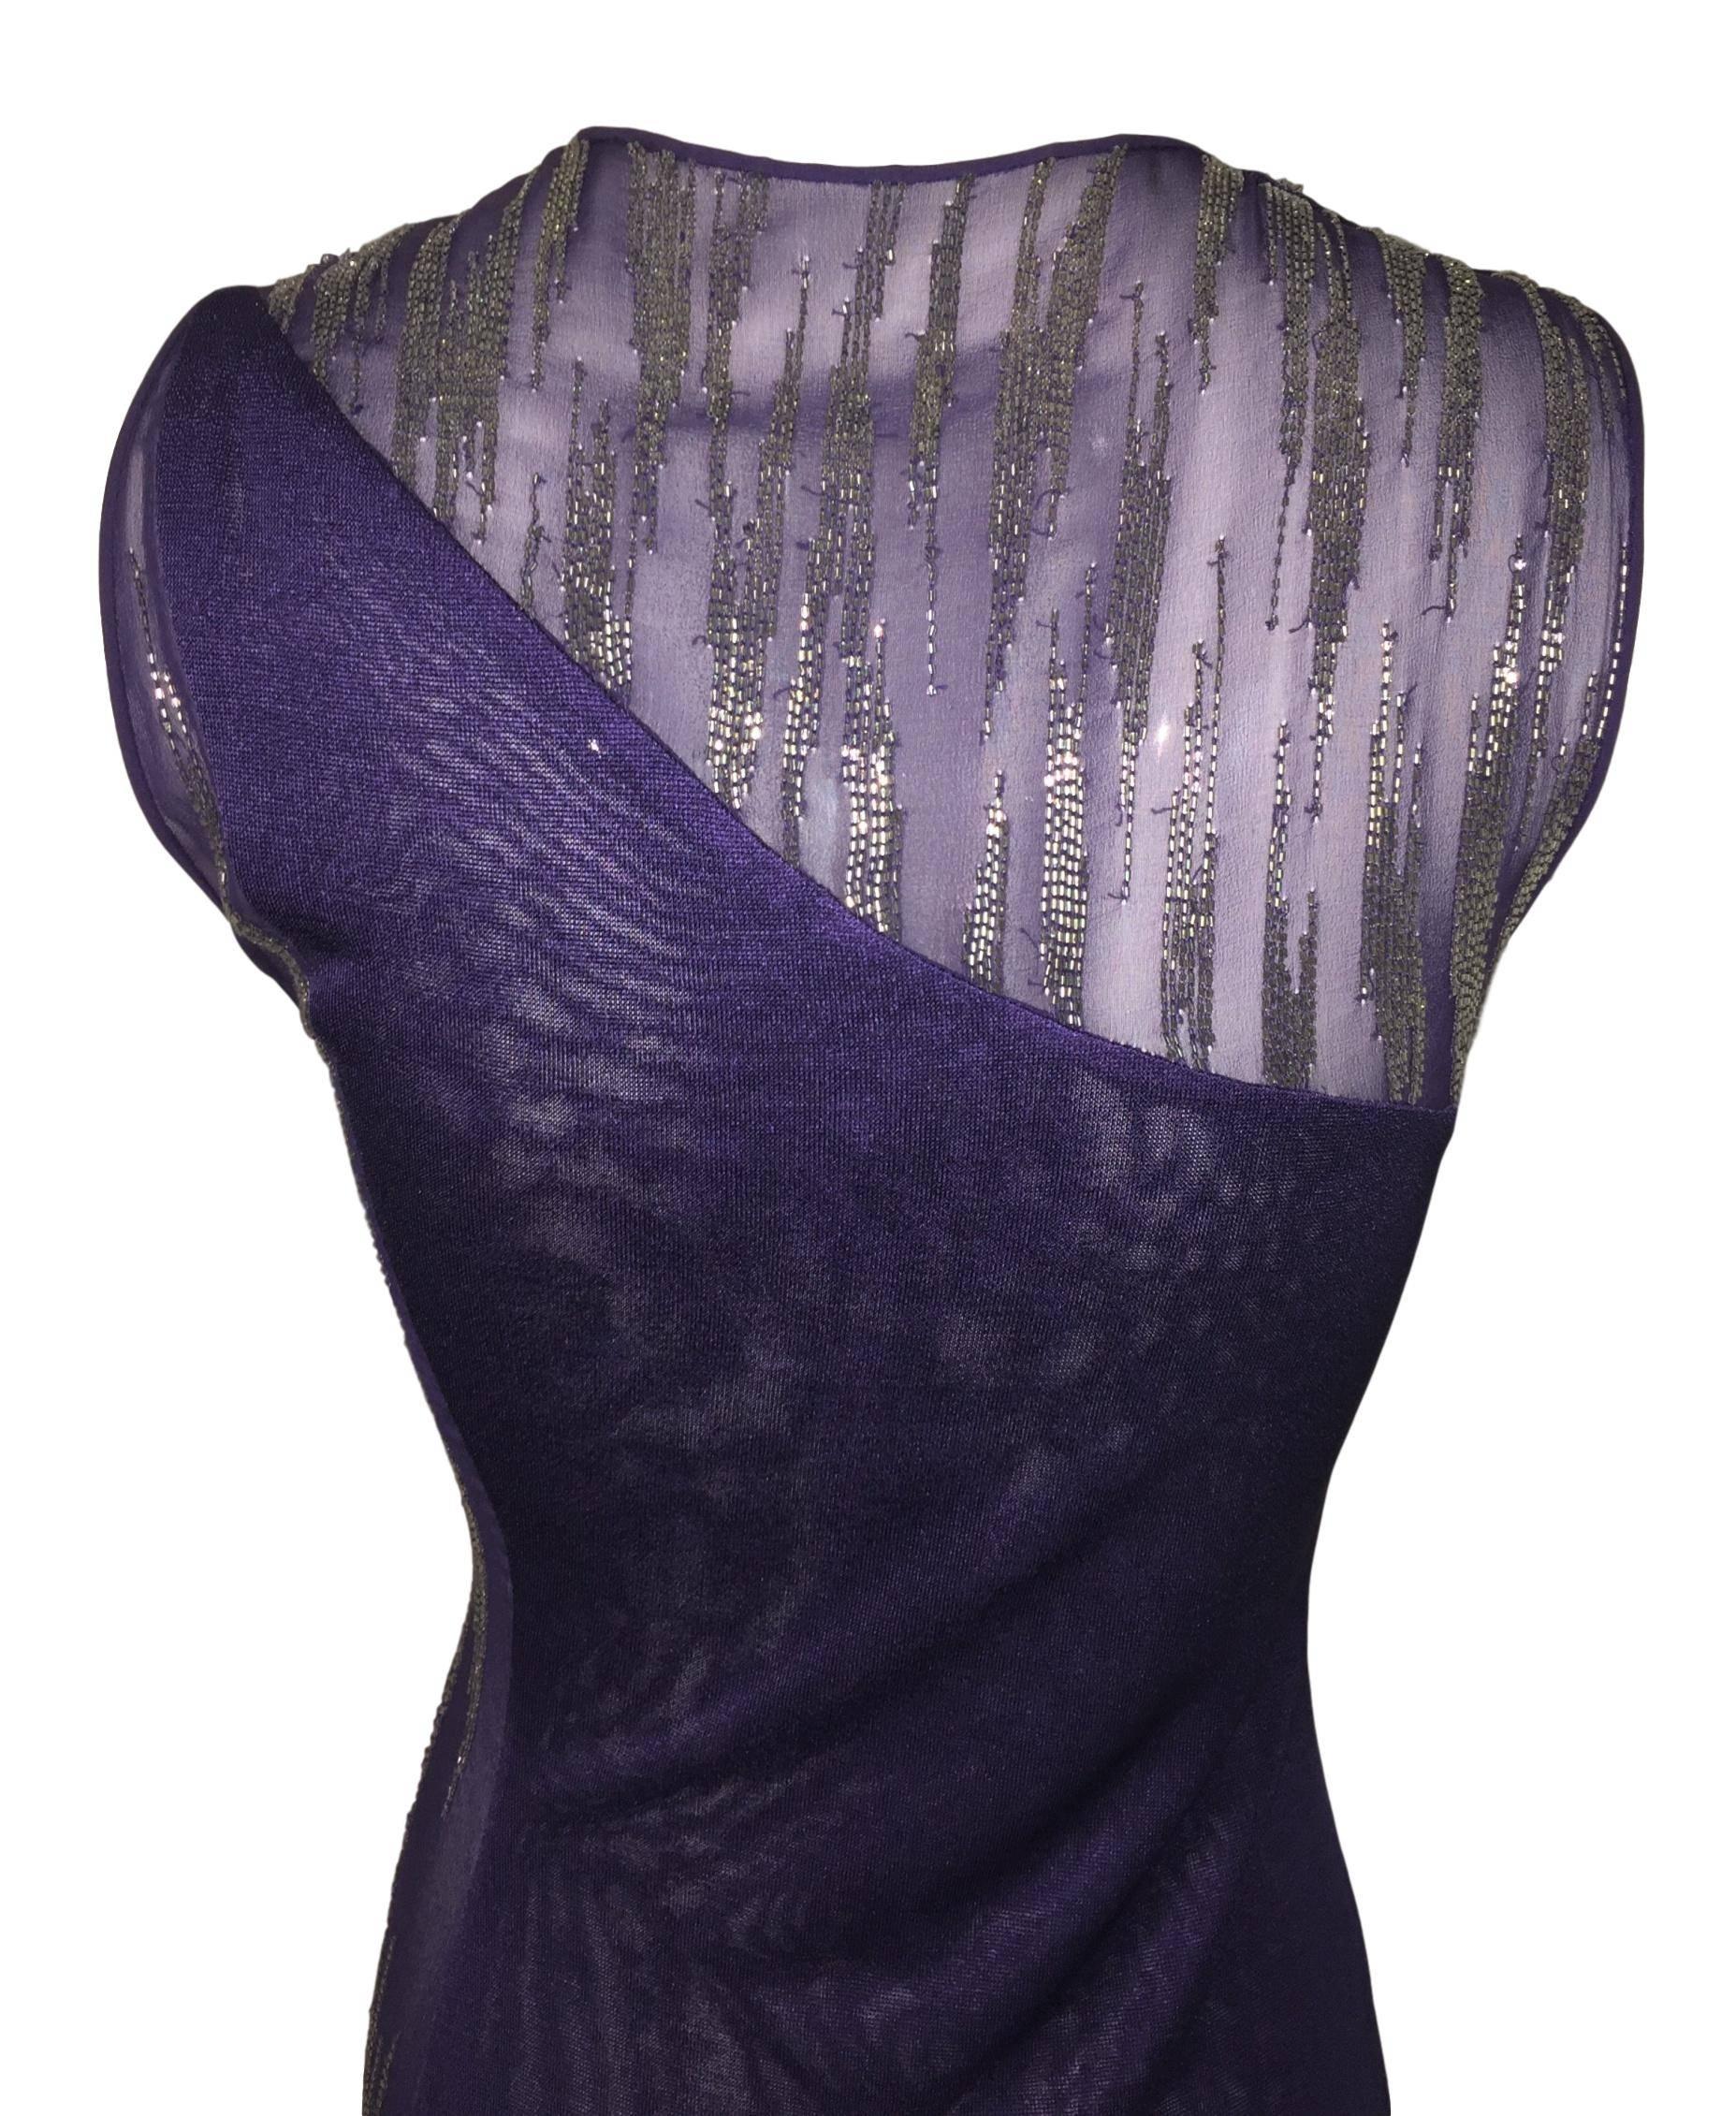 C. 2001 Atelier Versace Sheer Purple Beaded Gown Dress 1